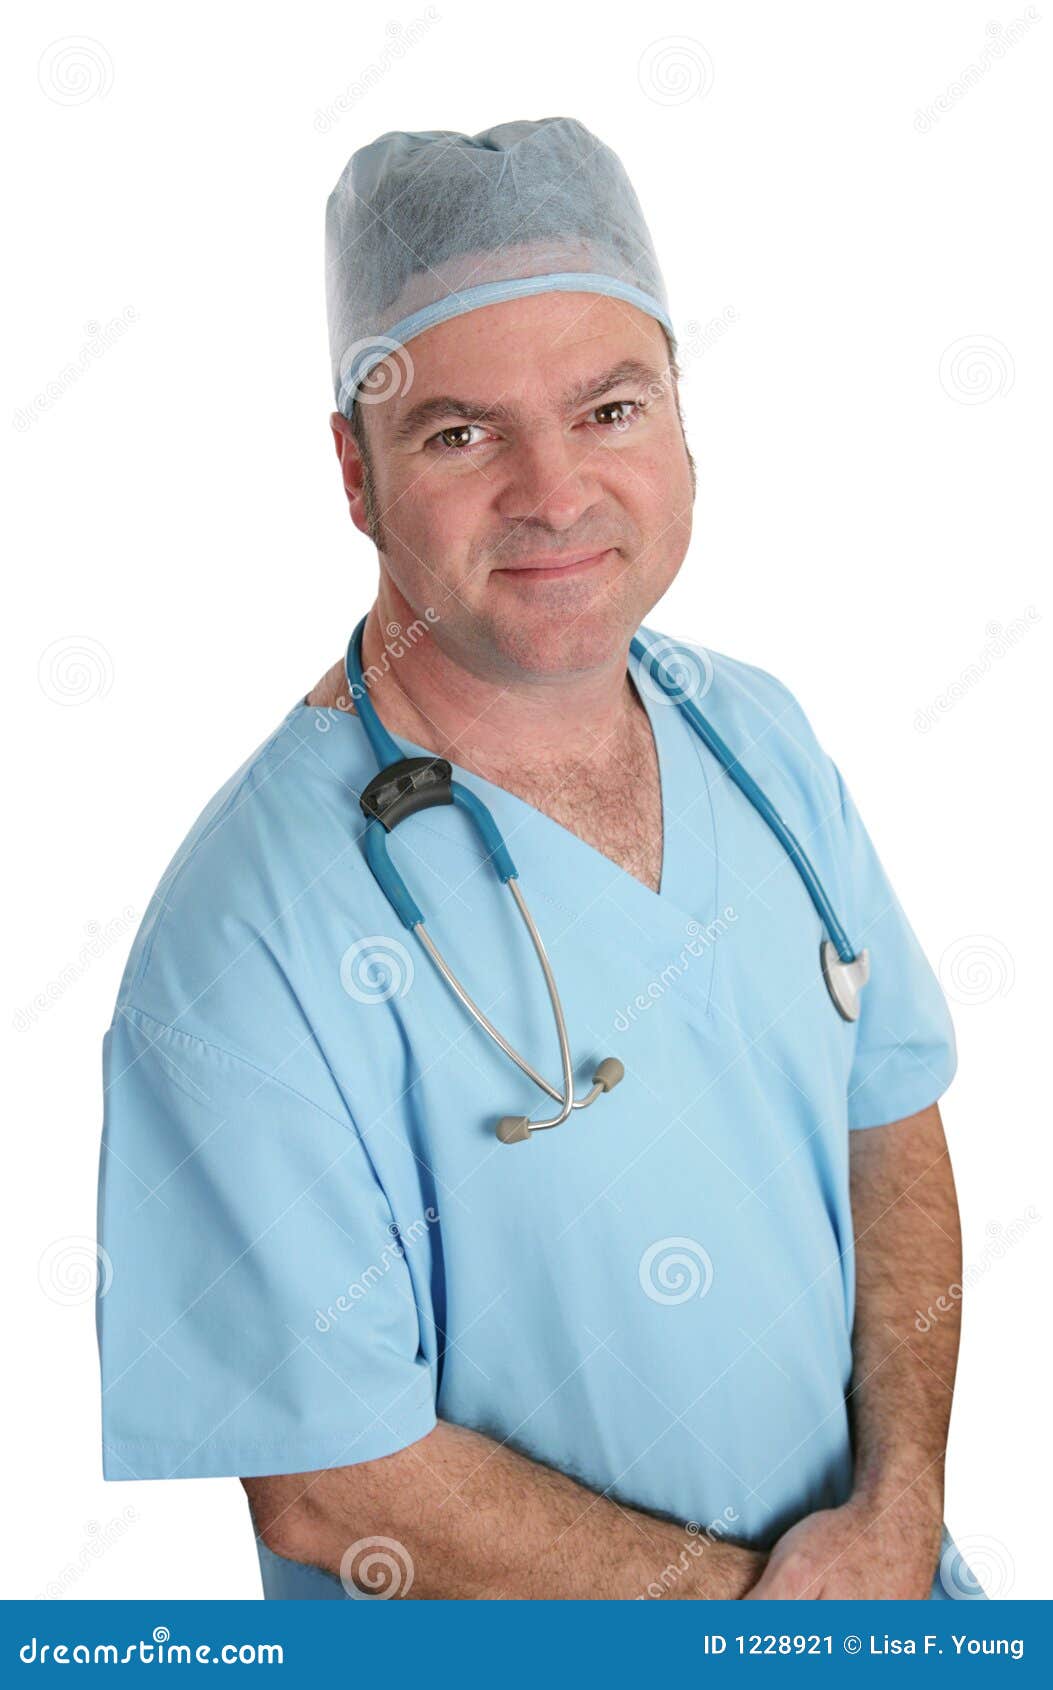 trustworthy doctor in scrubs